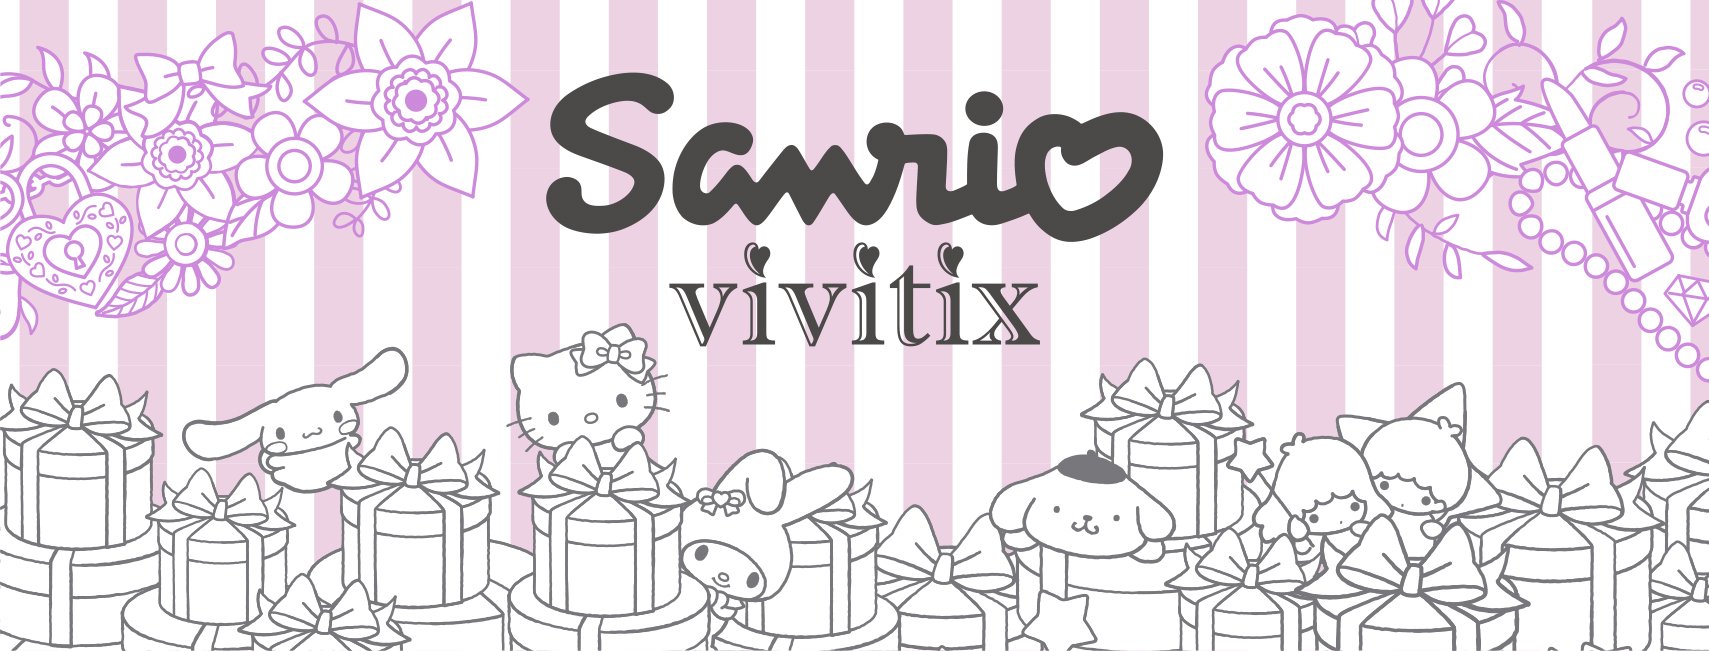 Sanrio Vivitix イオンモール大高店 愛知県 名古屋市 ショップ サンリオ